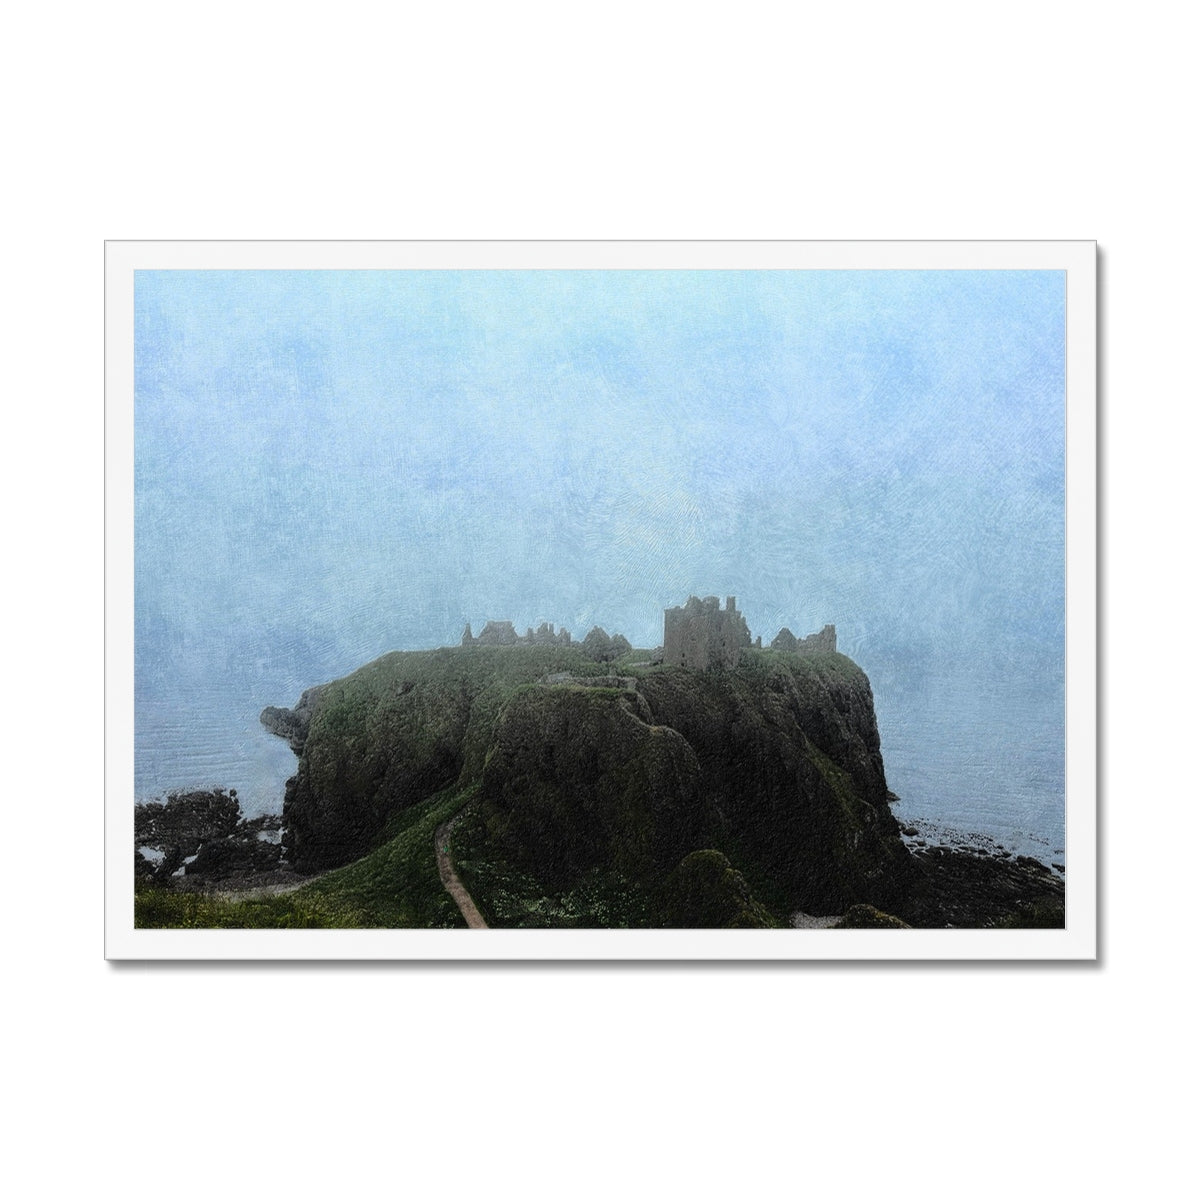 Dunnottar Castle Mist Painting | Framed Prints From Scotland-Framed Prints-Scottish Castles Art Gallery-A2 Landscape-White Frame-Paintings, Prints, Homeware, Art Gifts From Scotland By Scottish Artist Kevin Hunter